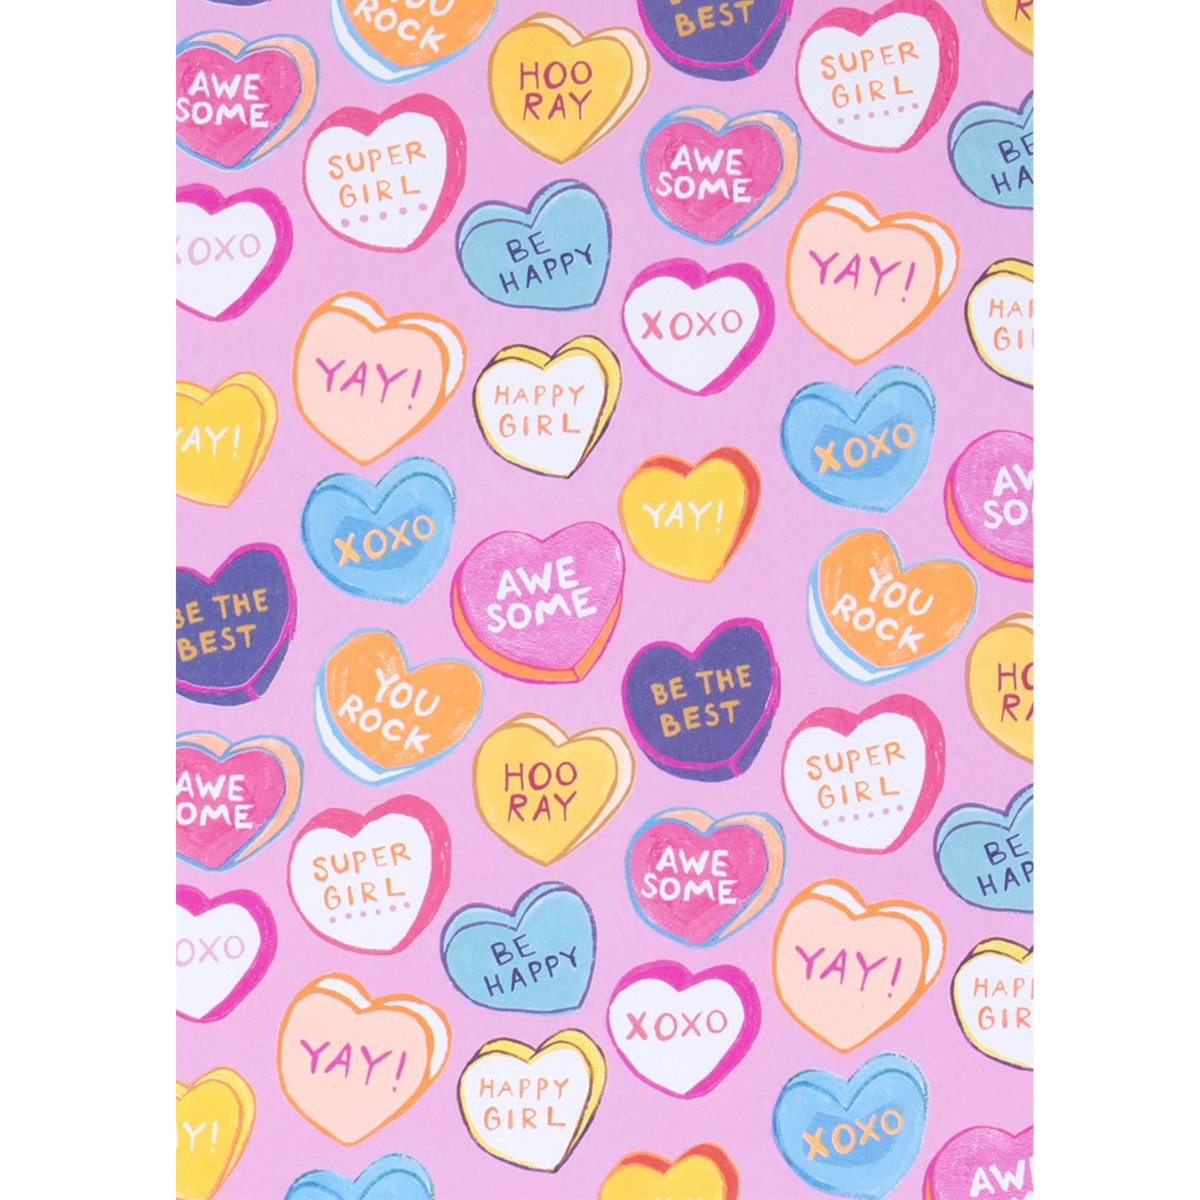 Giftwrap - Luxury Pink Sweetie Front Image